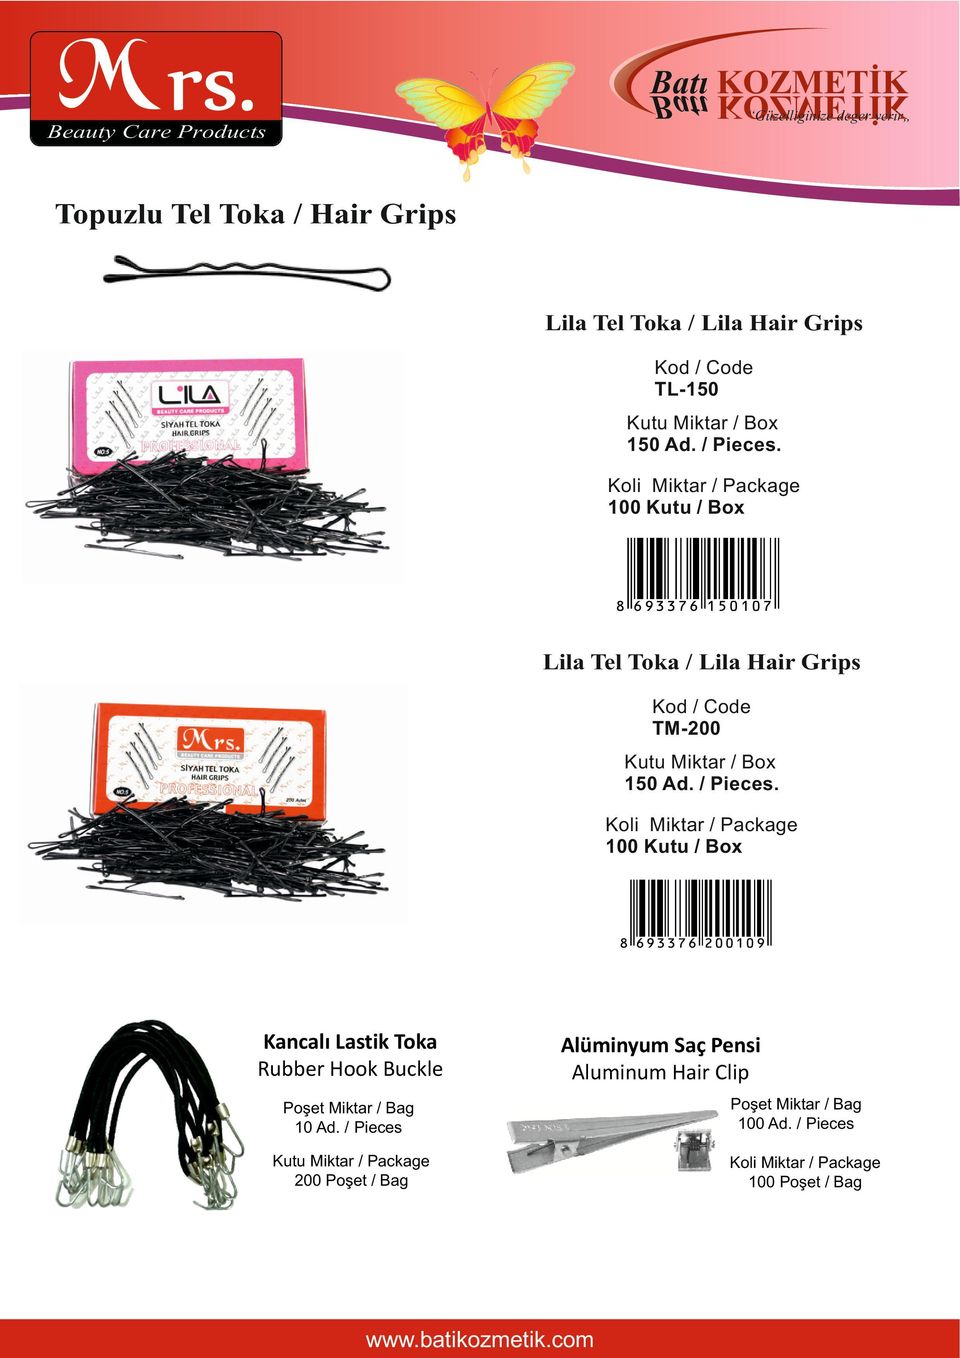 100 Kutu / Box 8 6 93 3 7 6 2 0 0 10 9 Kancalı Lastik Toka ubber Hook Buckle Alüminyum Saç Pensi Aluminum Hair